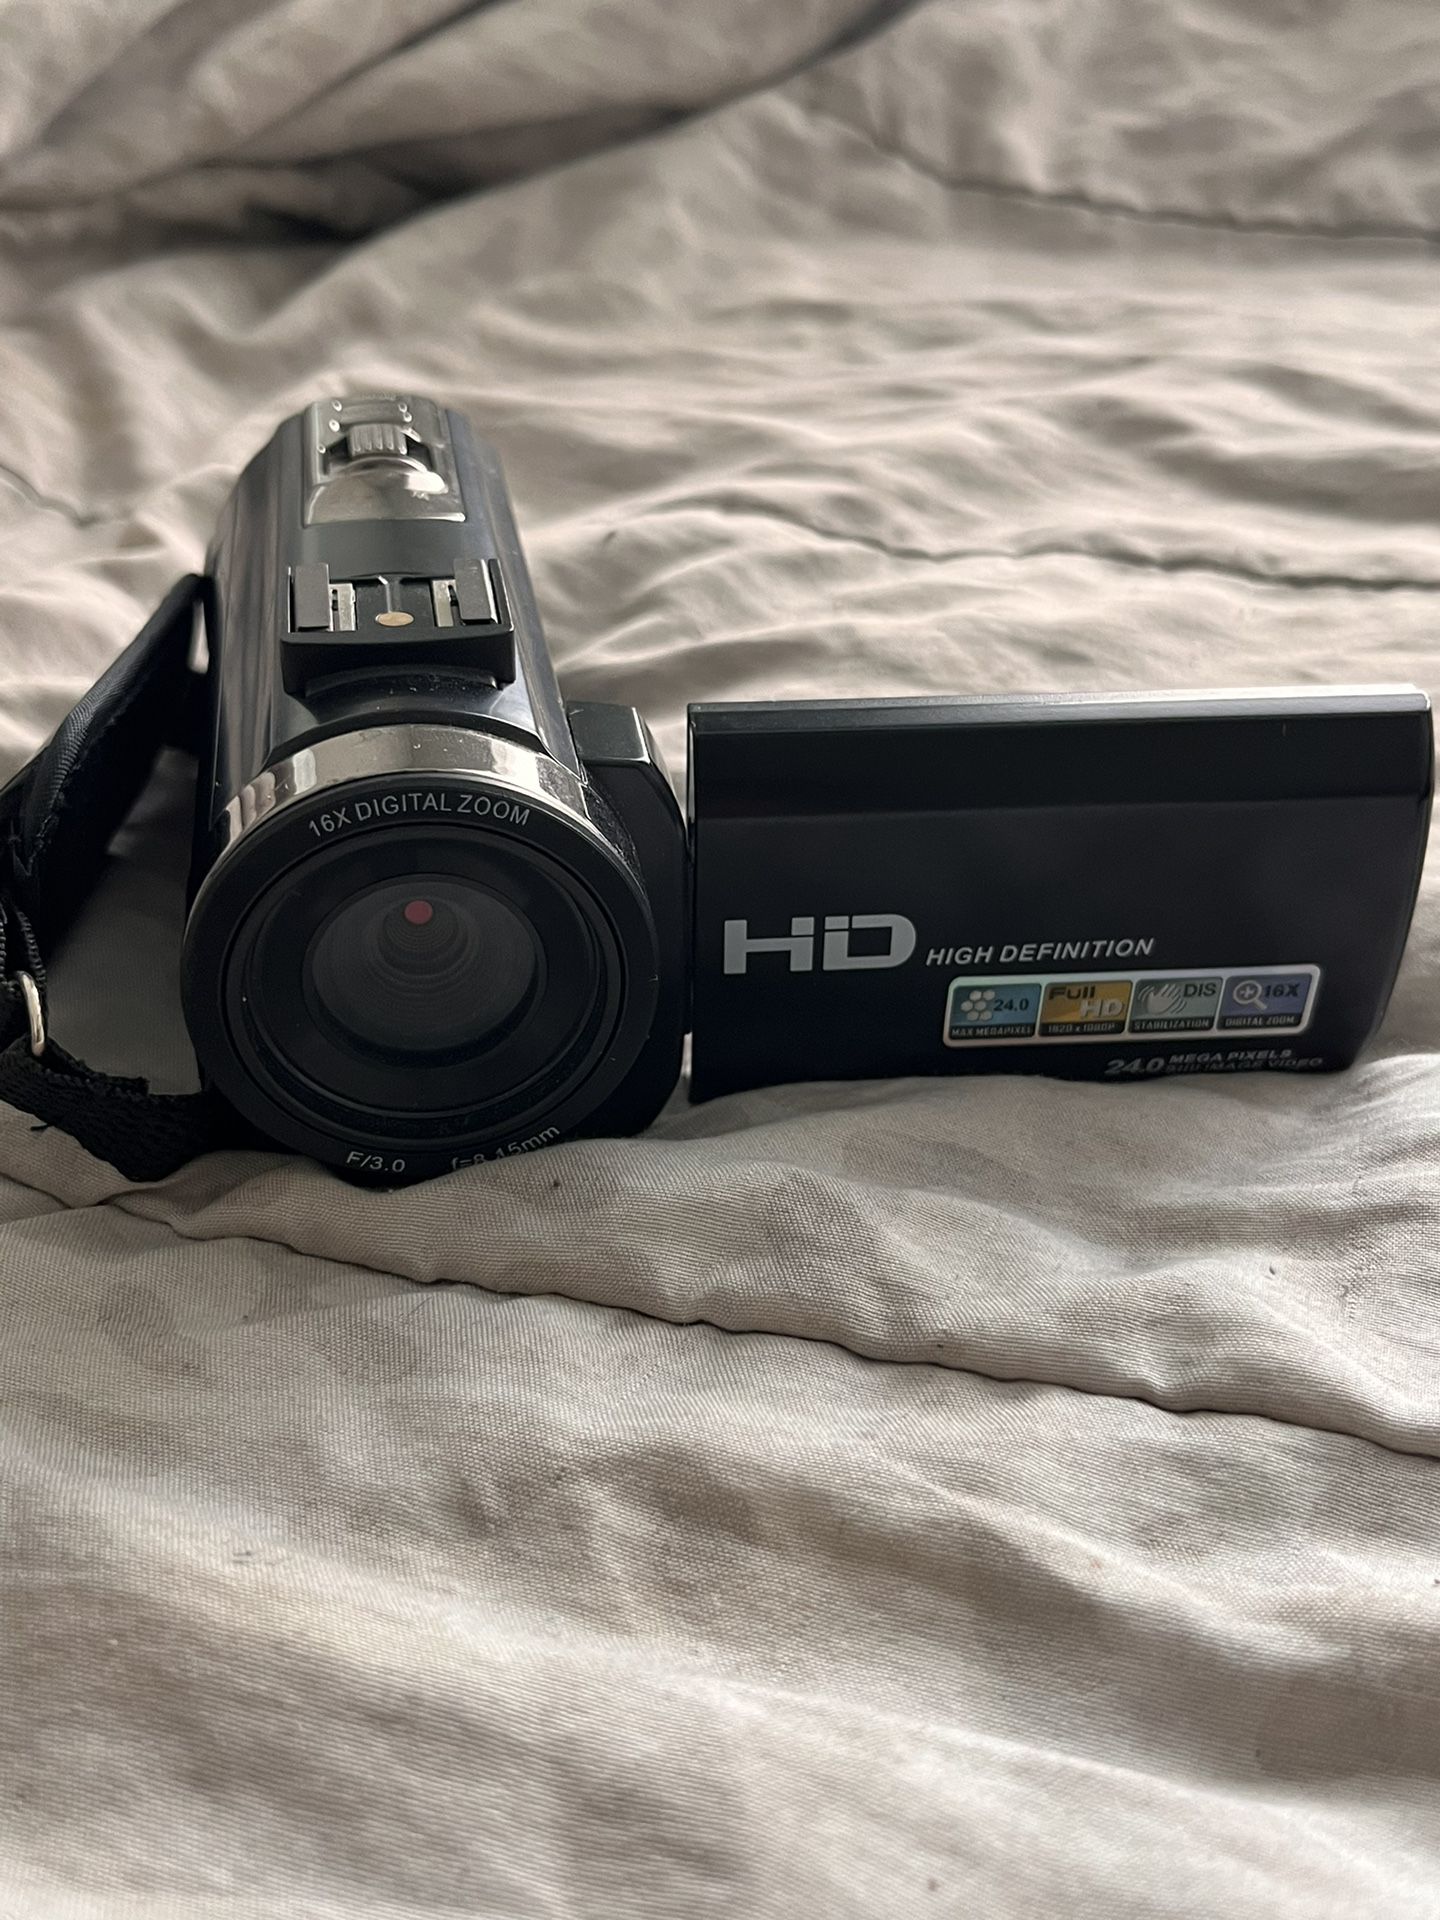 Video Camera Cam recorder